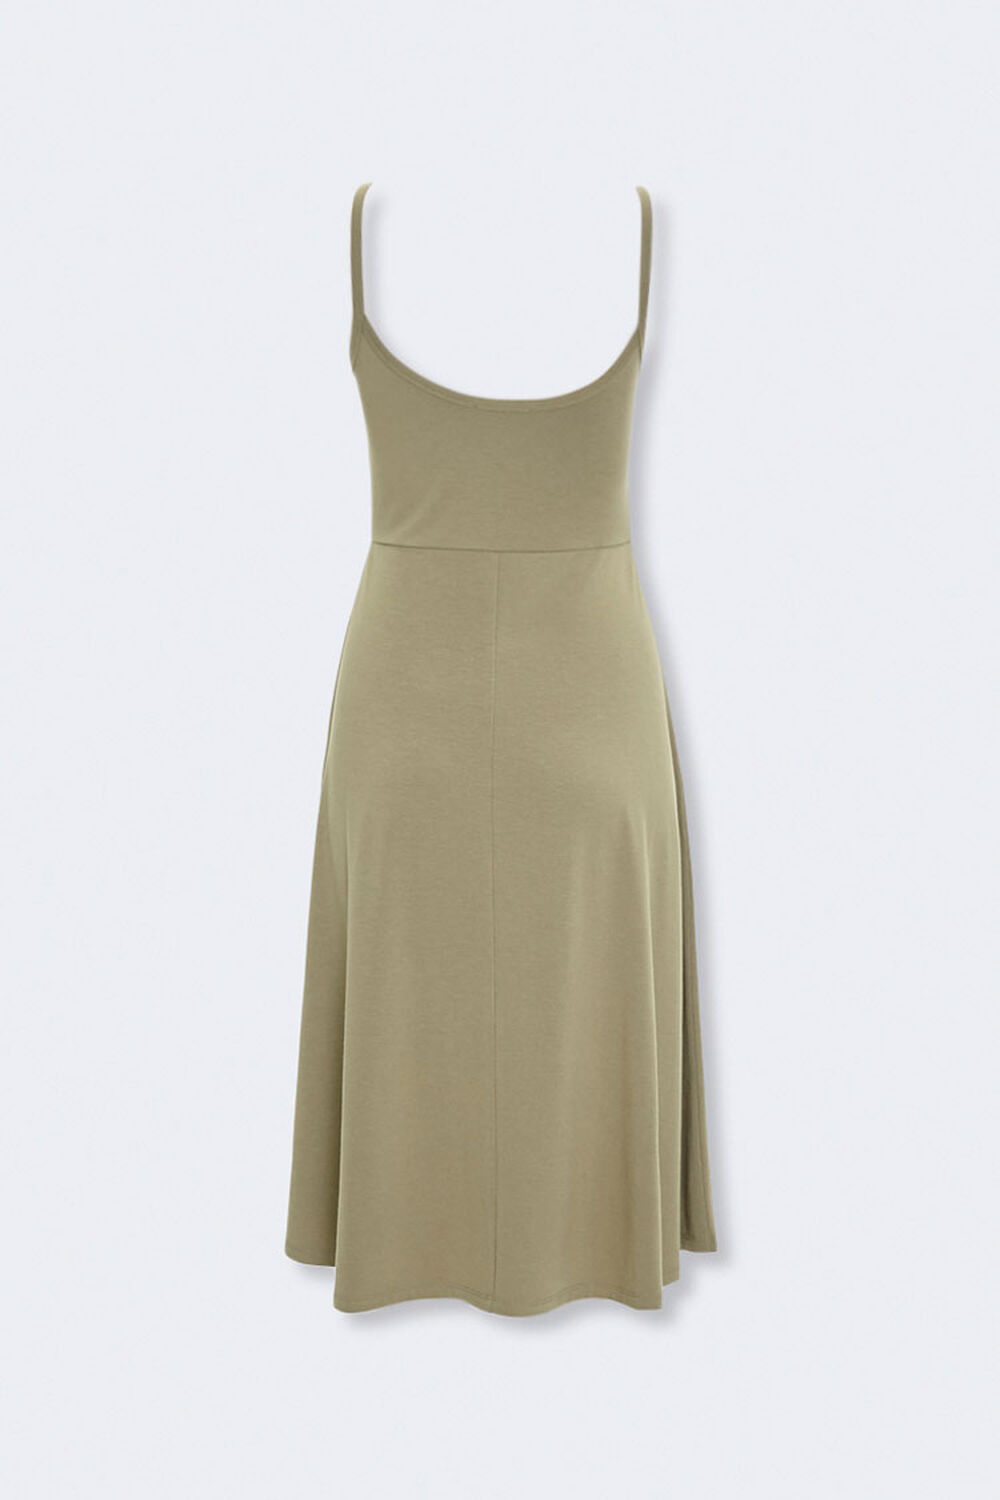 OLIVE Cami Midi Dress, image 3